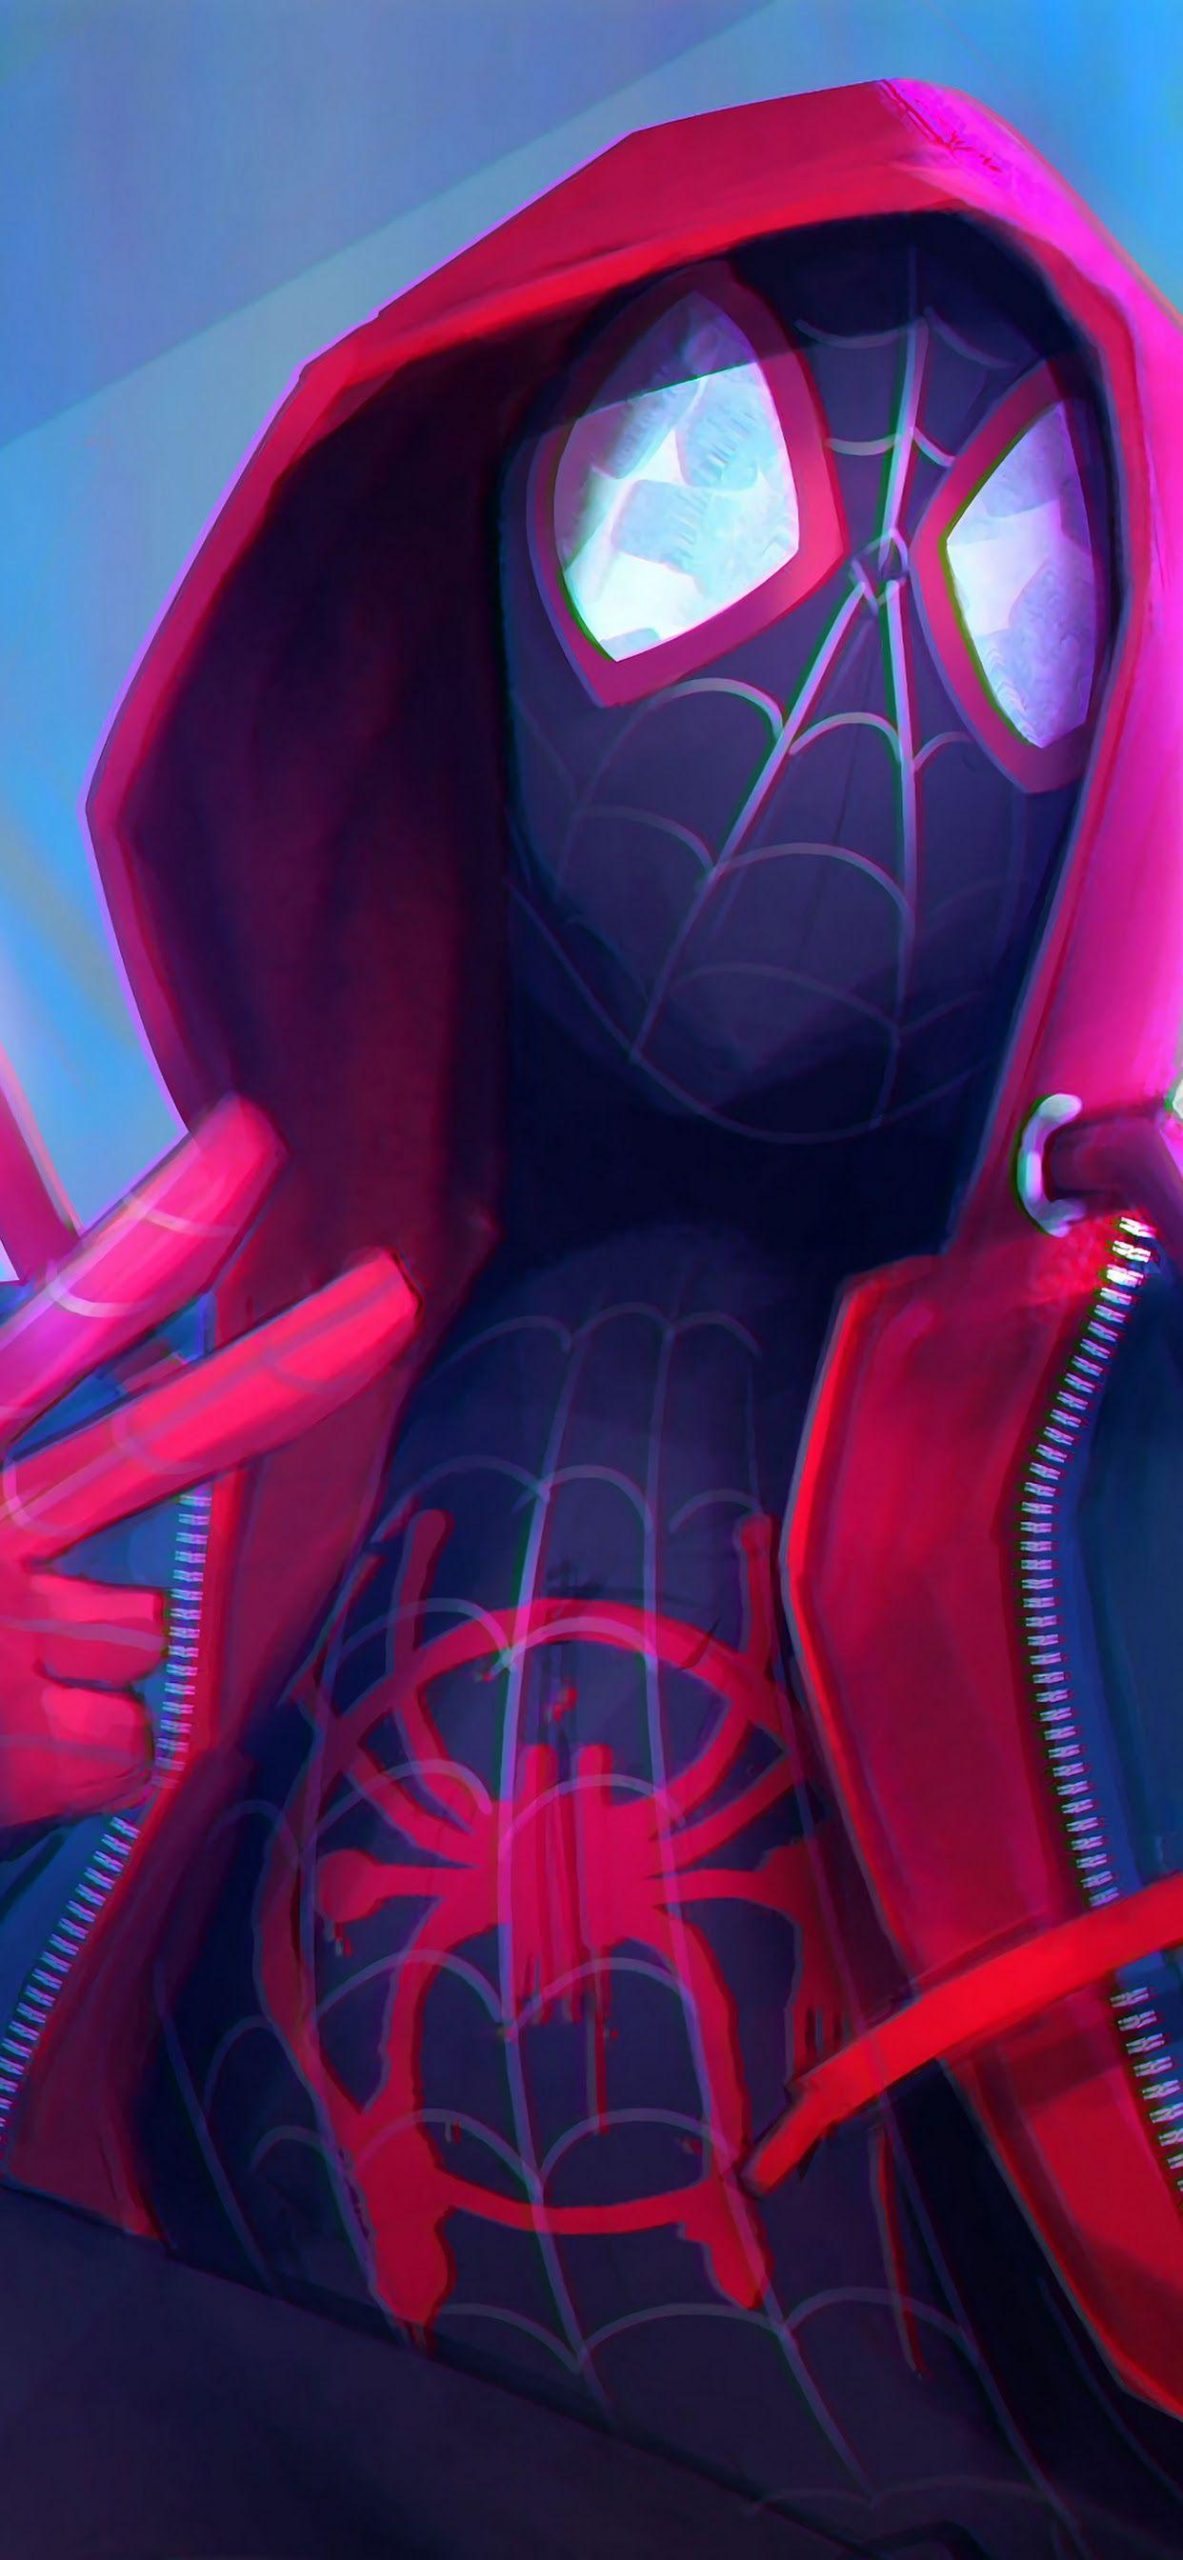 Spider Man Miles Morales iPhone 11 1080p Wallpaper